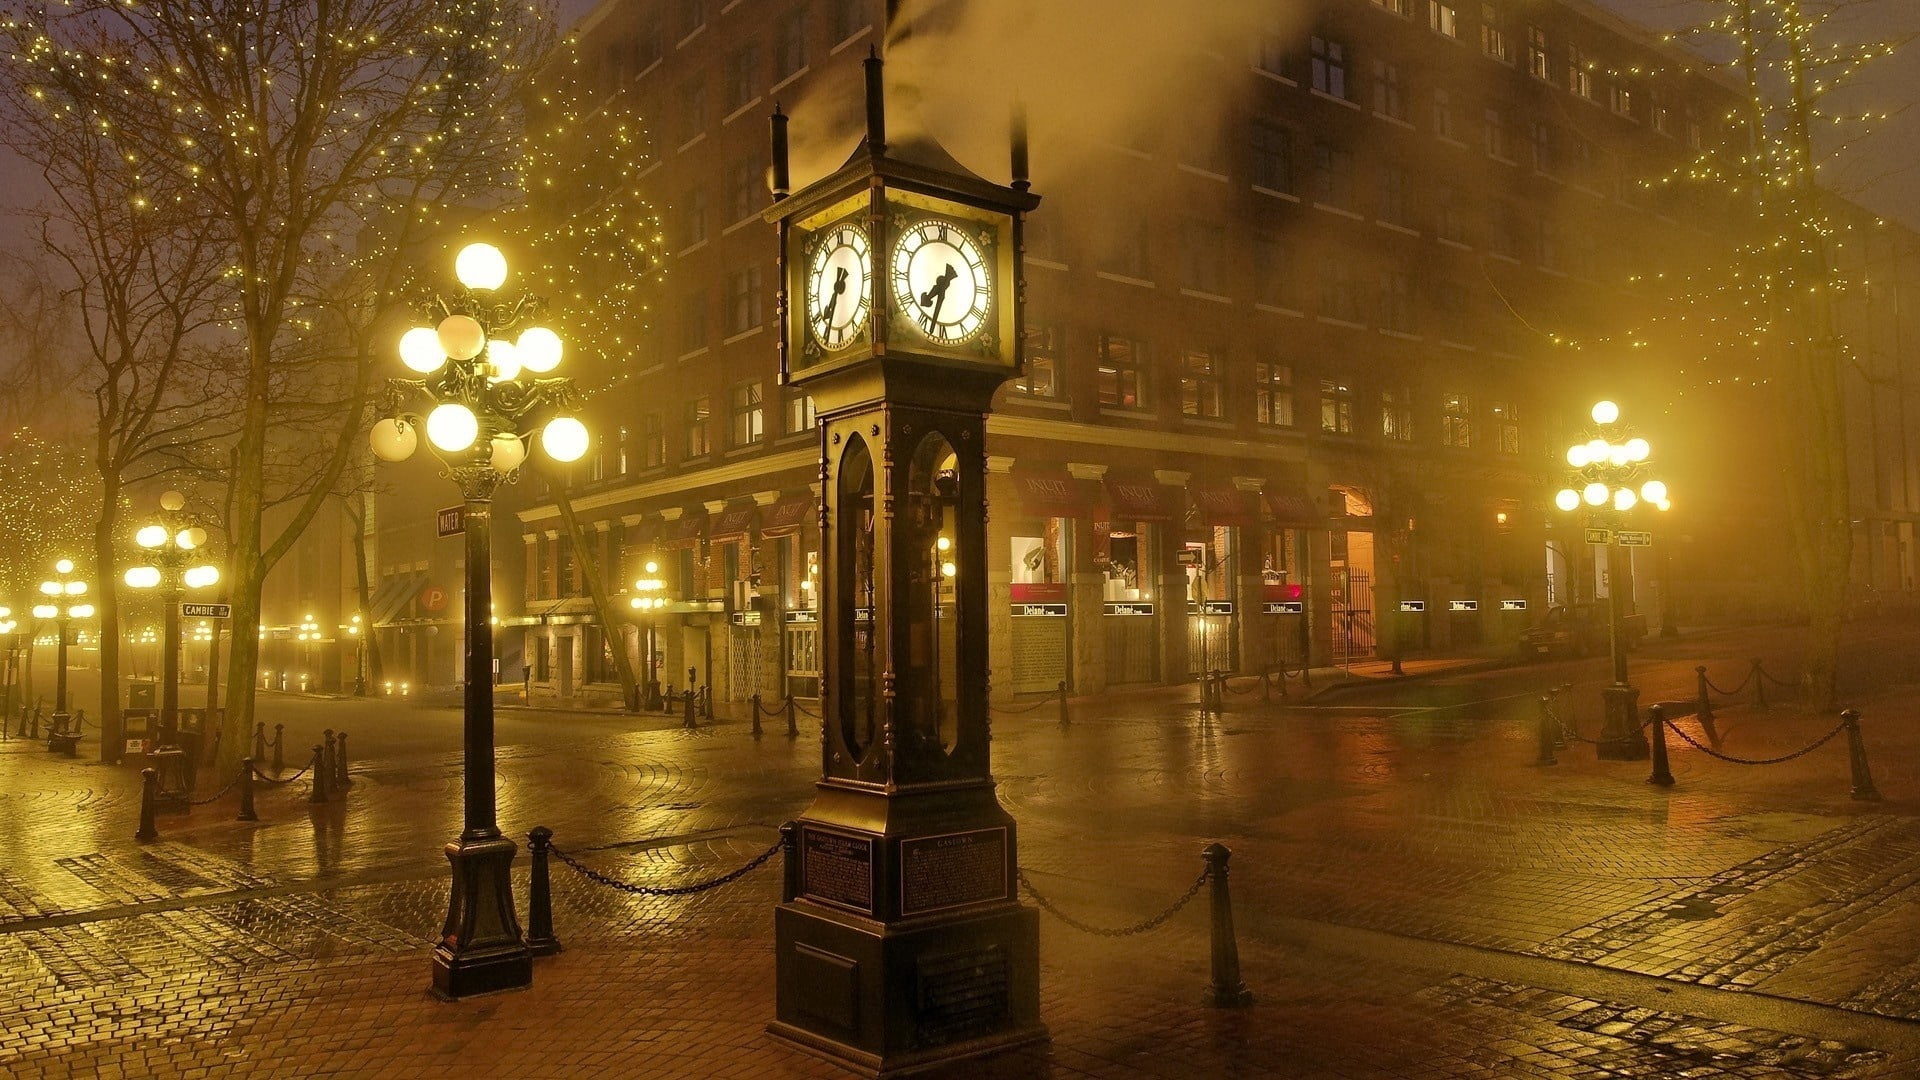 gray grandfathers clock, hours, night, lights, street, city, sepia